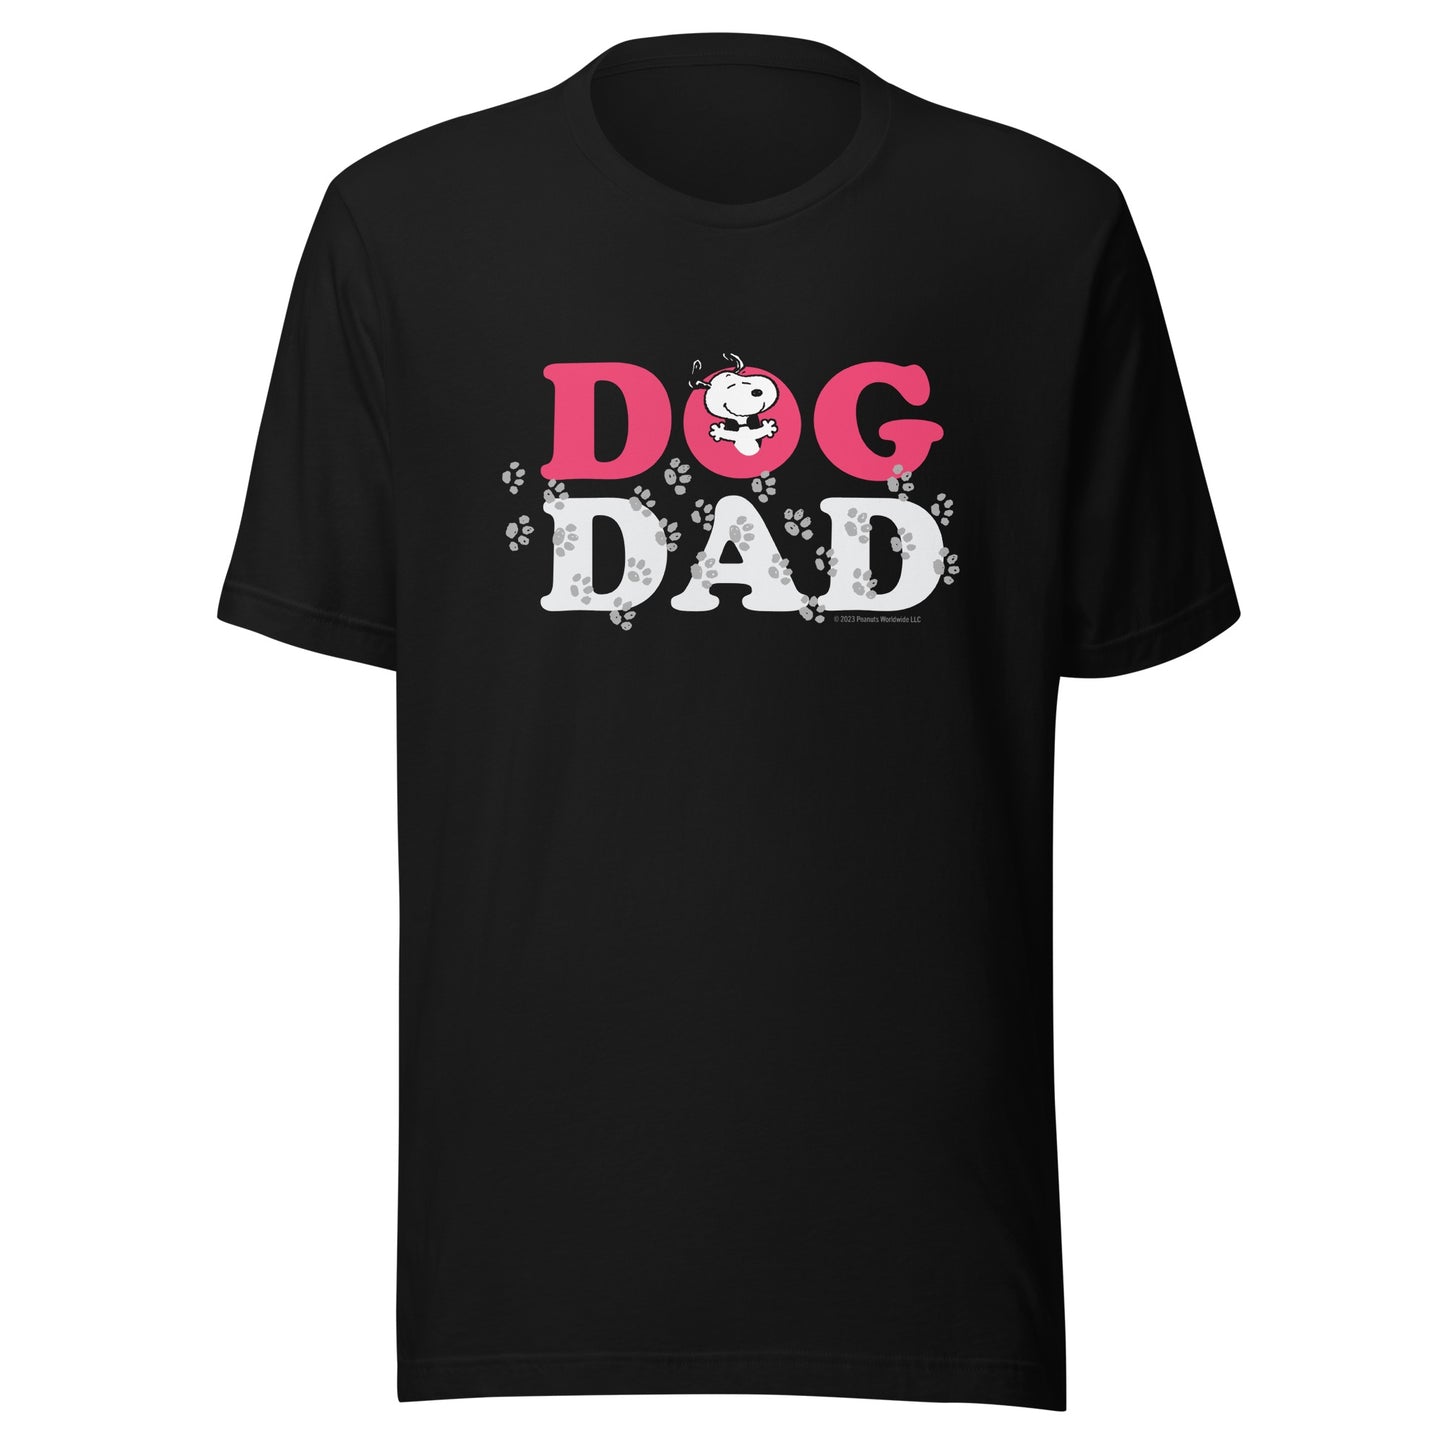 Snoopy Dog Dad Adult T-Shirt